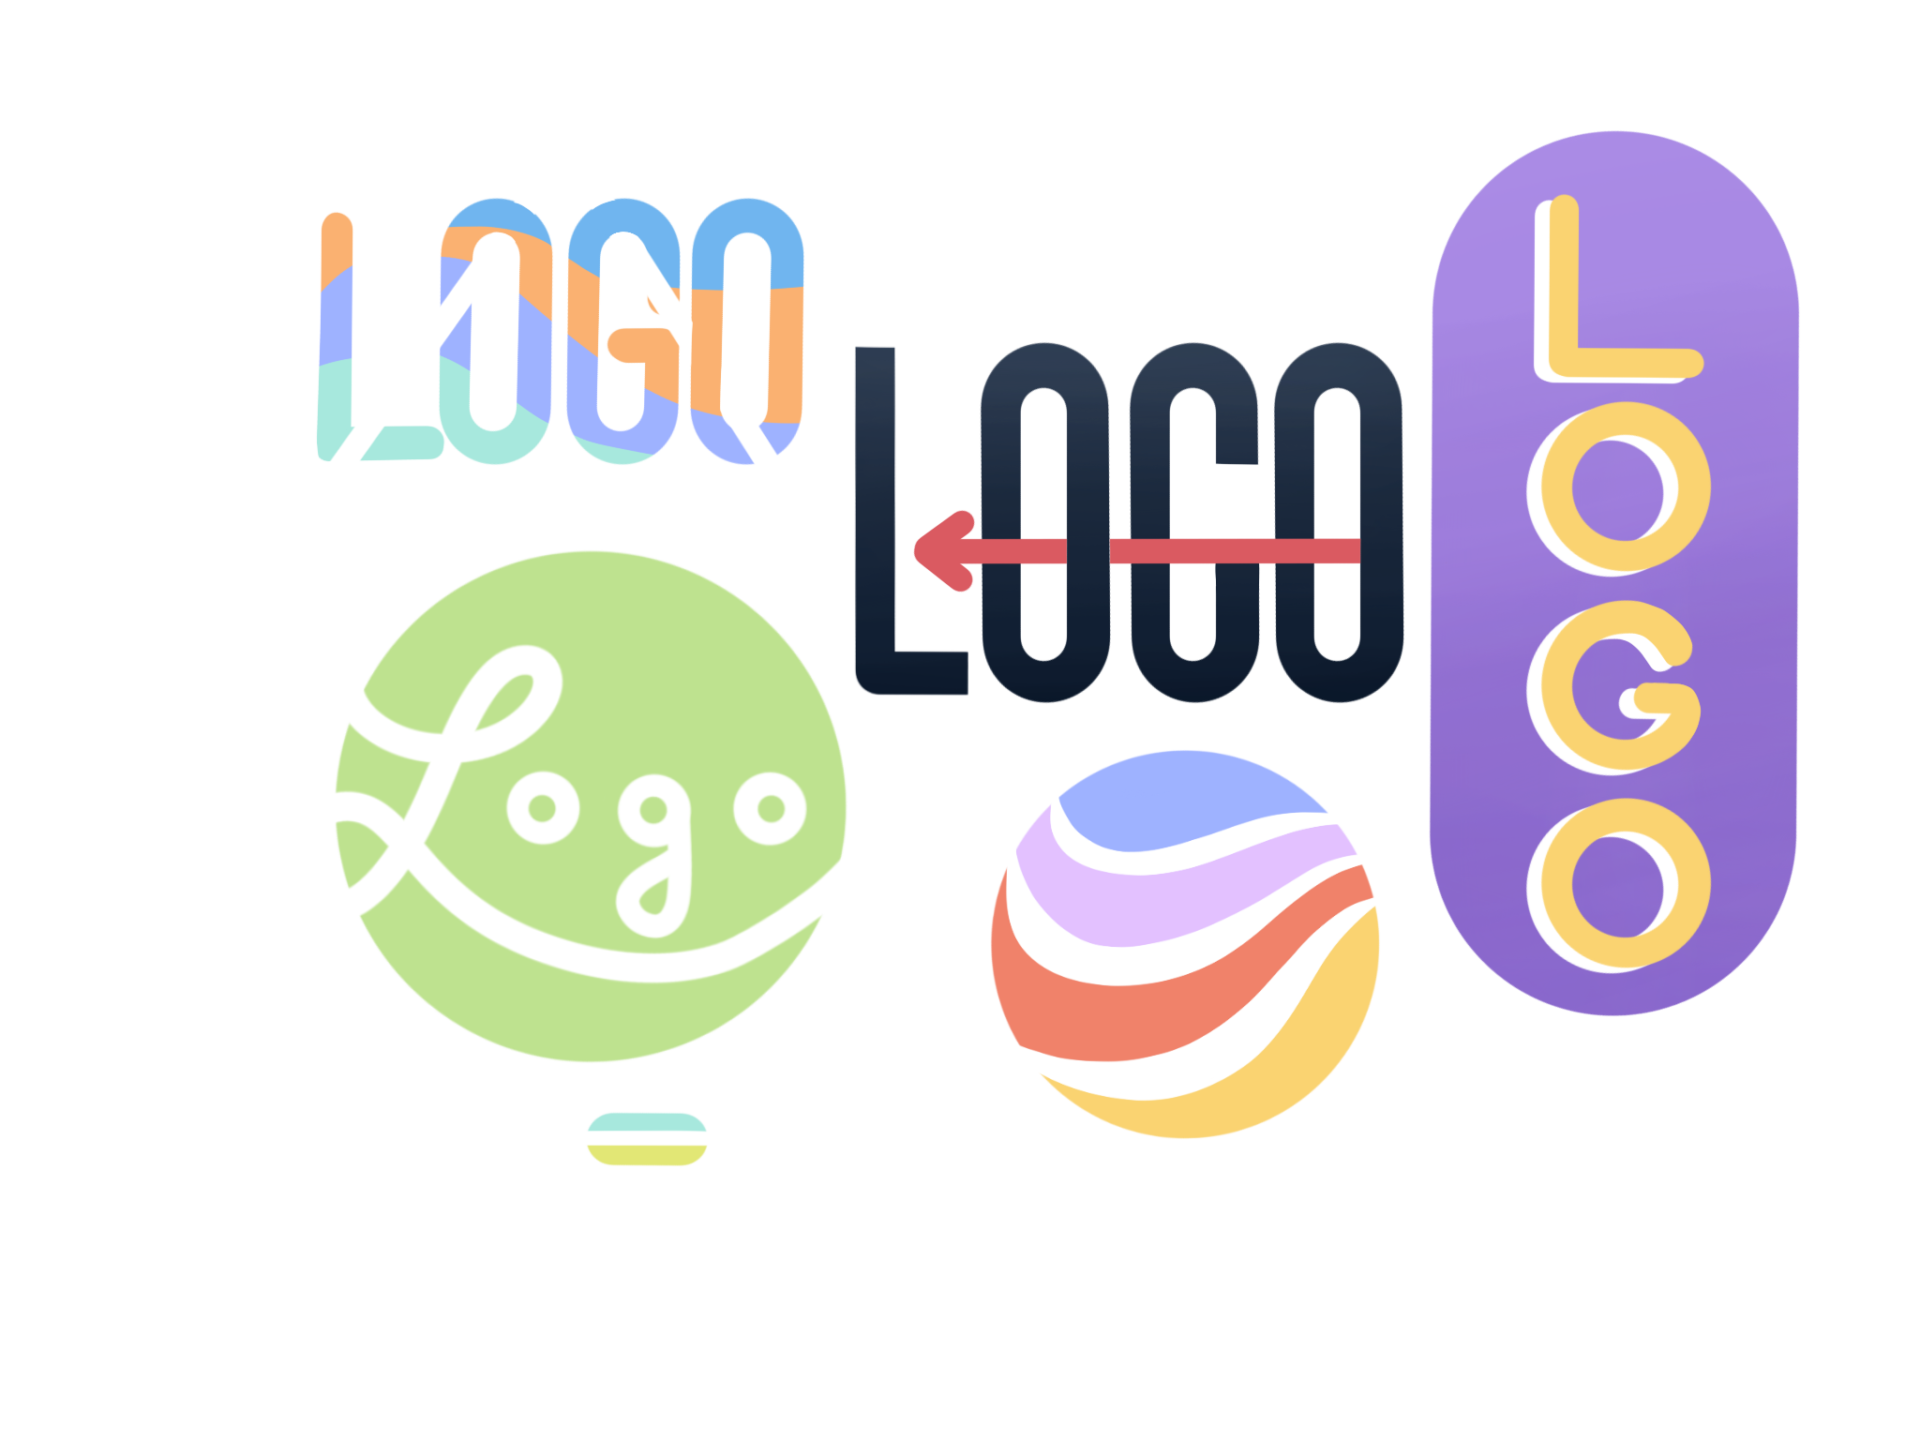 different kind of vector logo illustrations